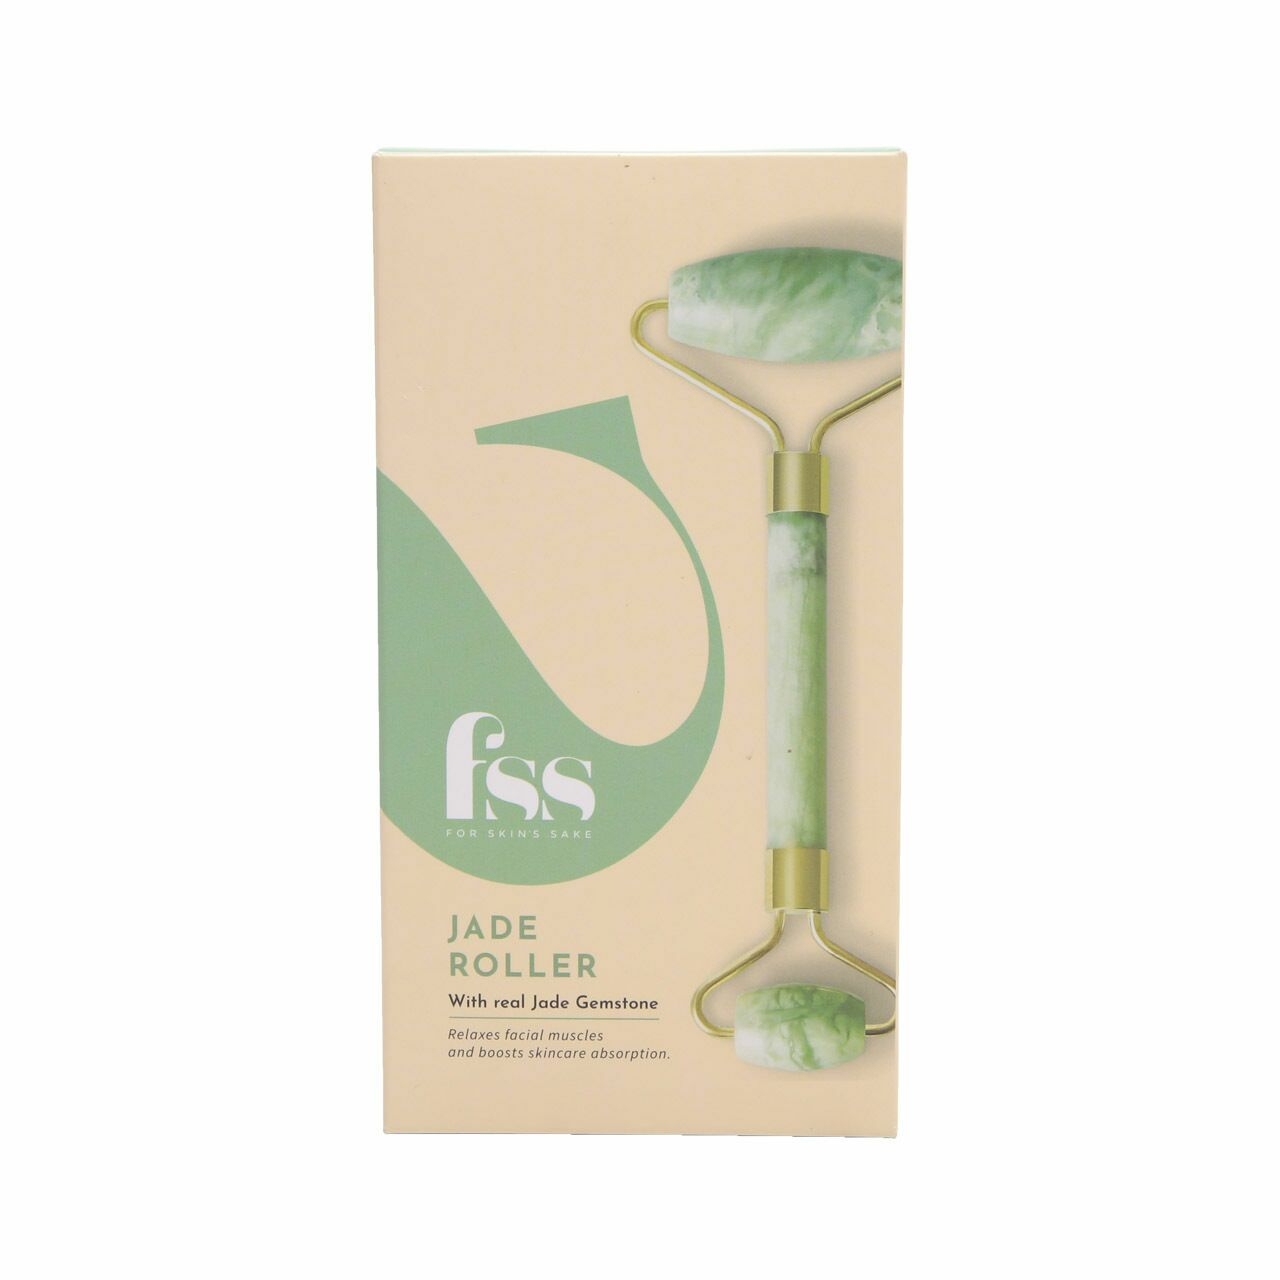 FSS For Skin's Sake Jade Roller With Real Jade Gemstone Green Tools